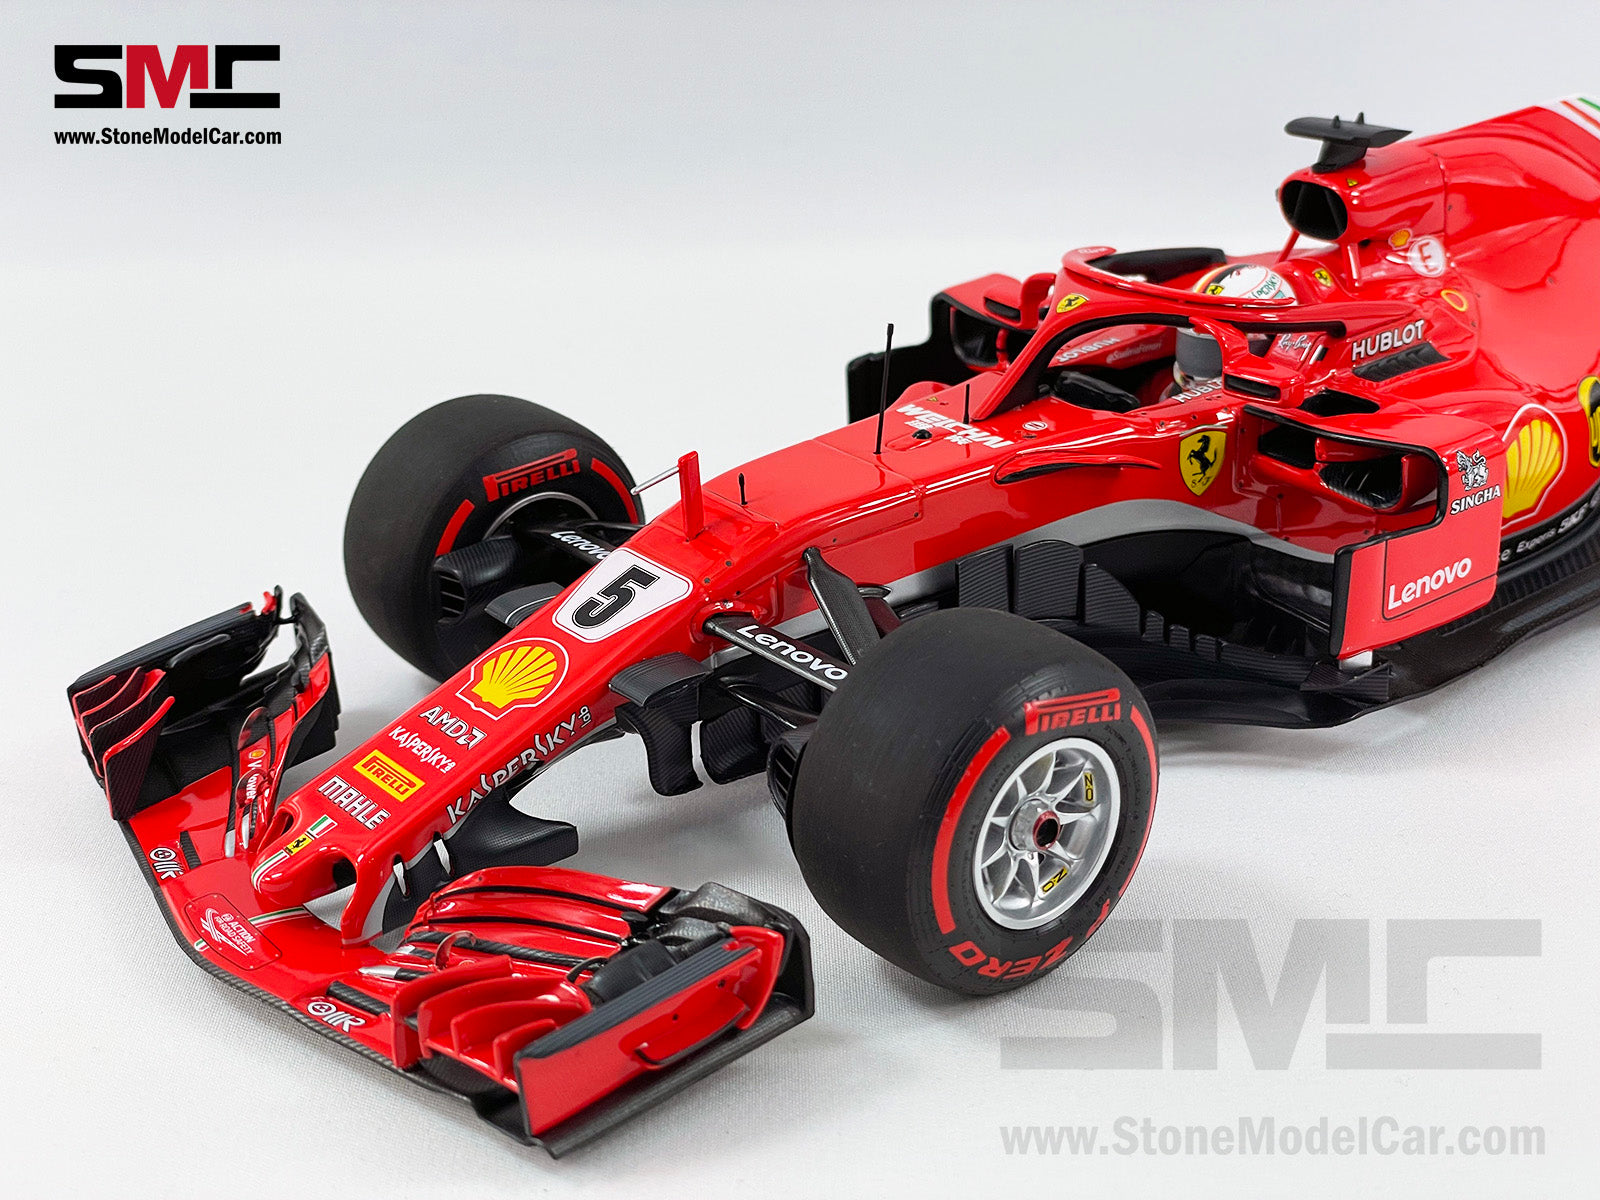 Ferrari SF71H S. vettel #5 formule 1 2018 bburago 1/18